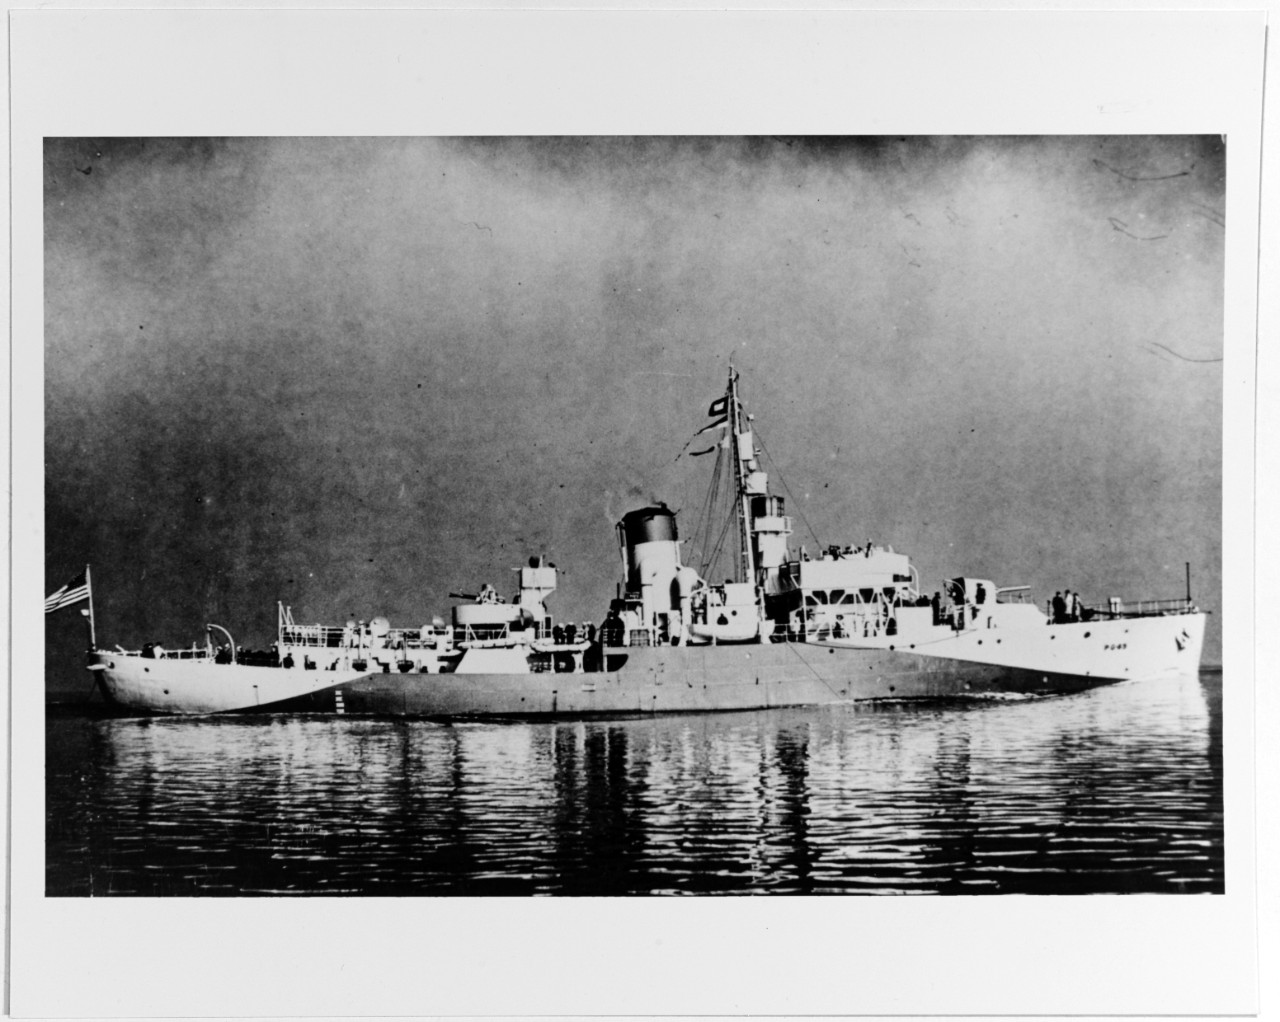 USS SAUCY (PG-65)